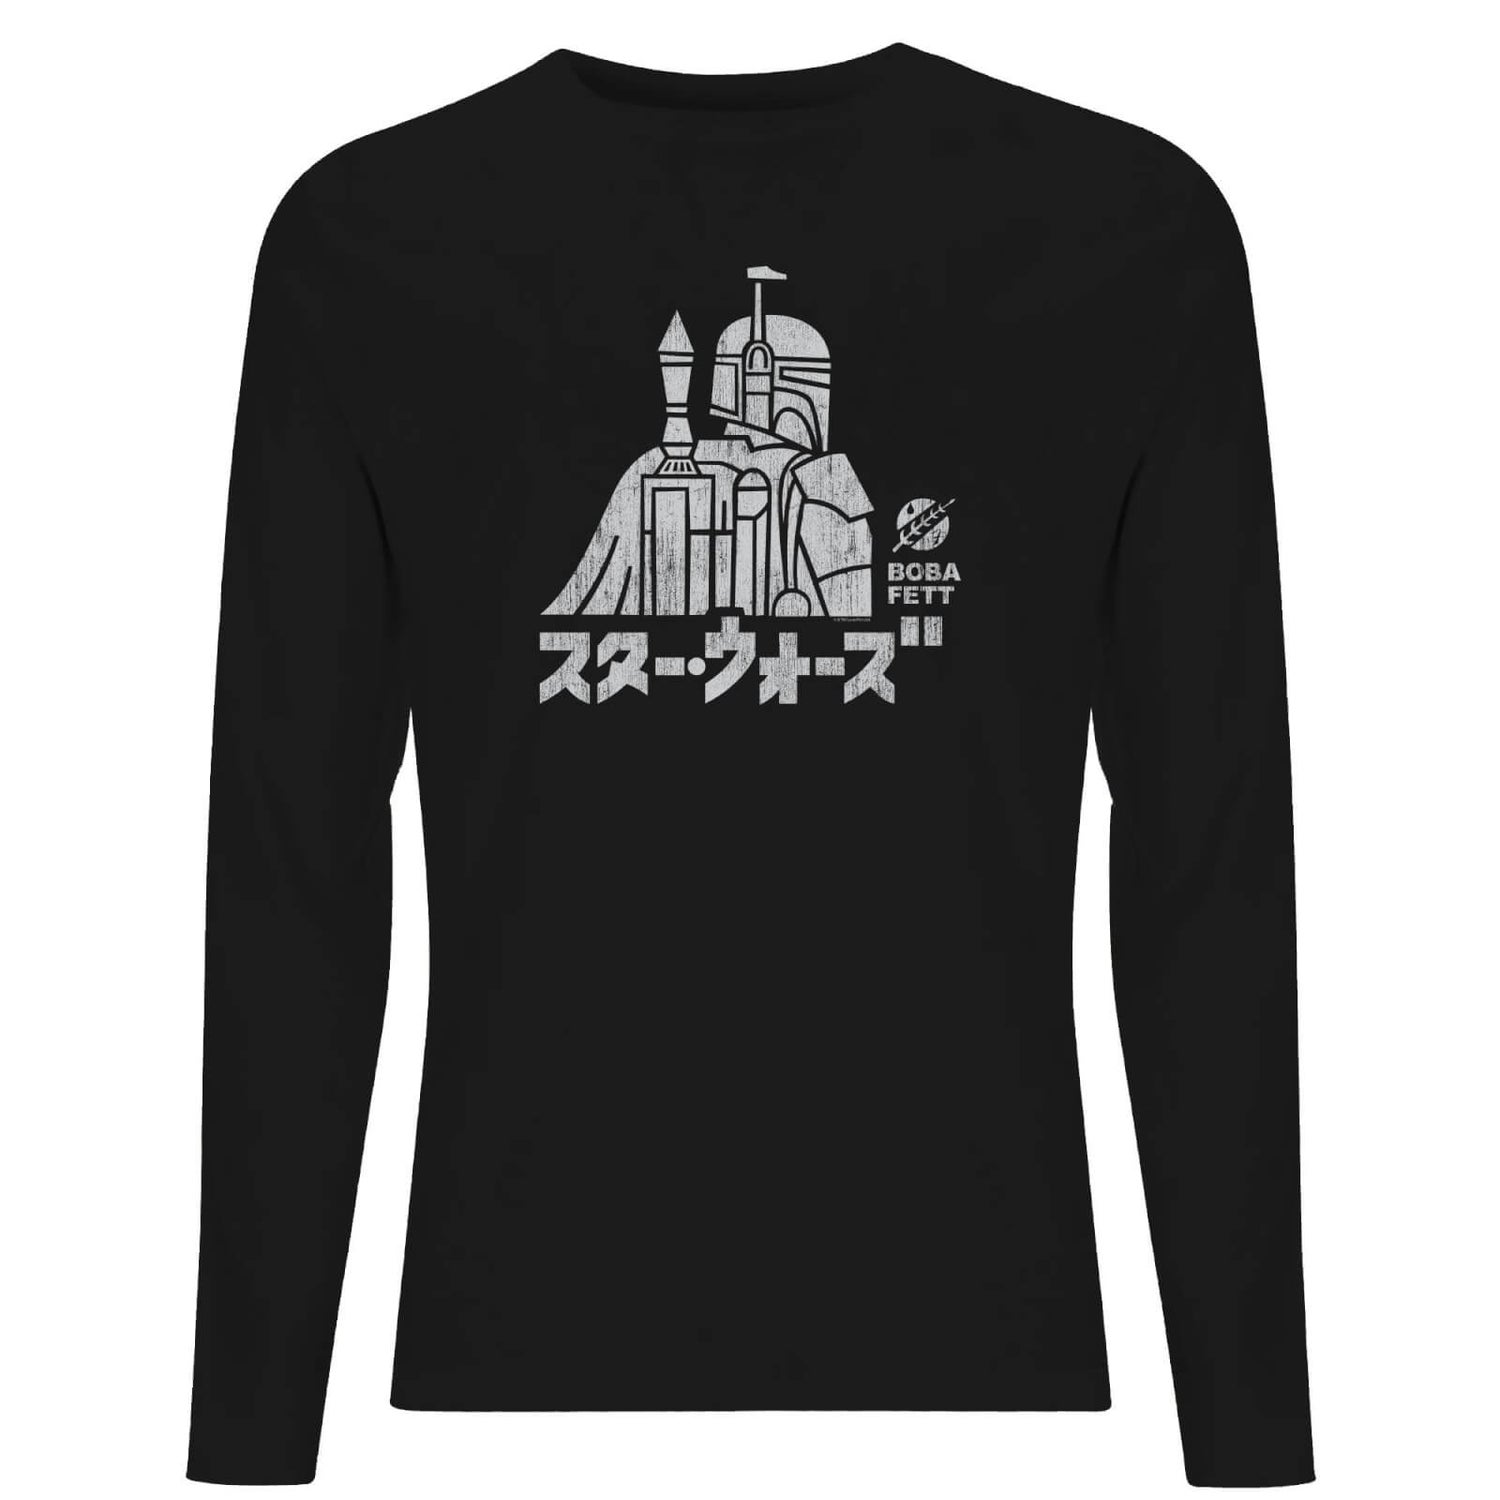 Camiseta de manga larga Kana Boba Fett para hombre de Star Wars - Negro